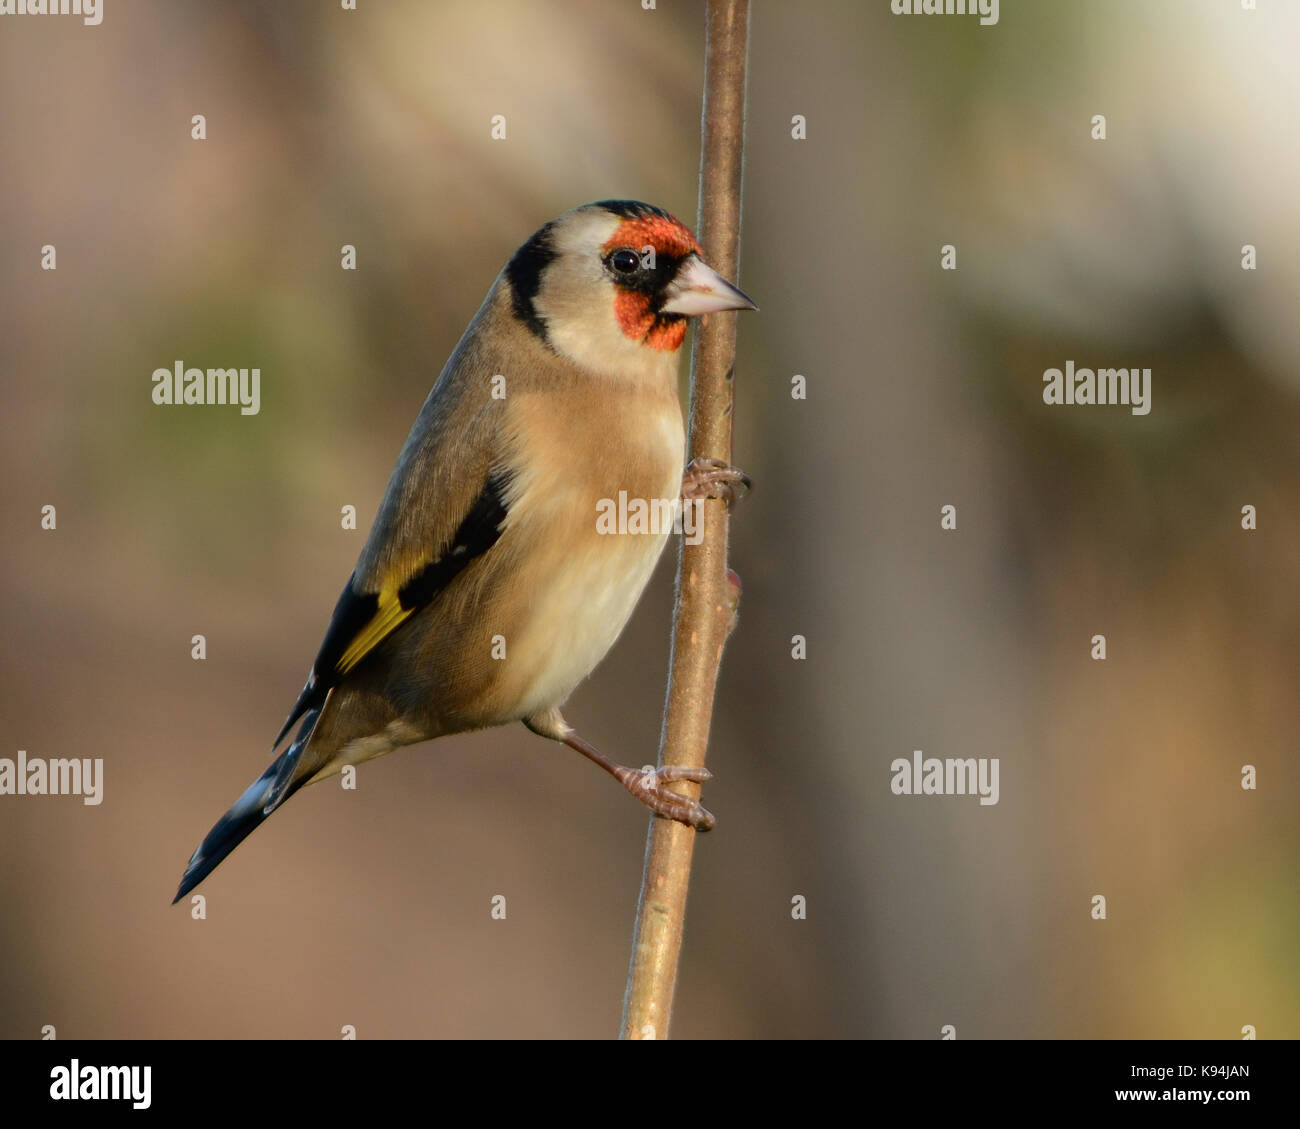 European goldfinch common garden bird pictured in a natural dappled sunlight light in England UK Stock Photo